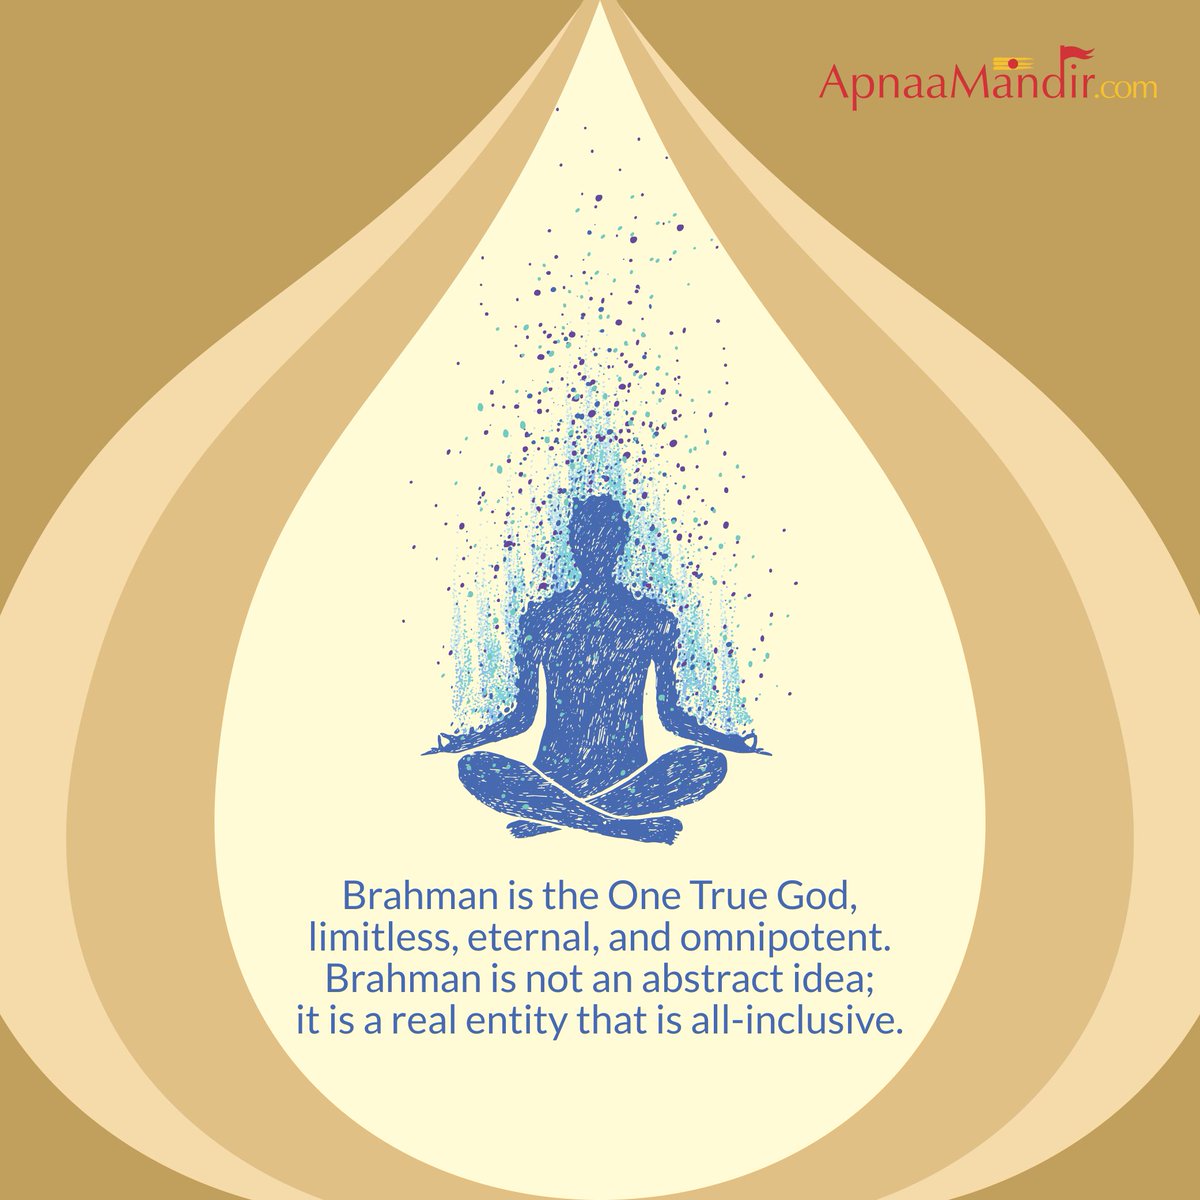 Brahman- the spiritual essence of the world. Brahman is the nature of truth, knowledge, and infinity. #brahman #spiritualessence #truth #knowledge #infinity #ApnaaMandir